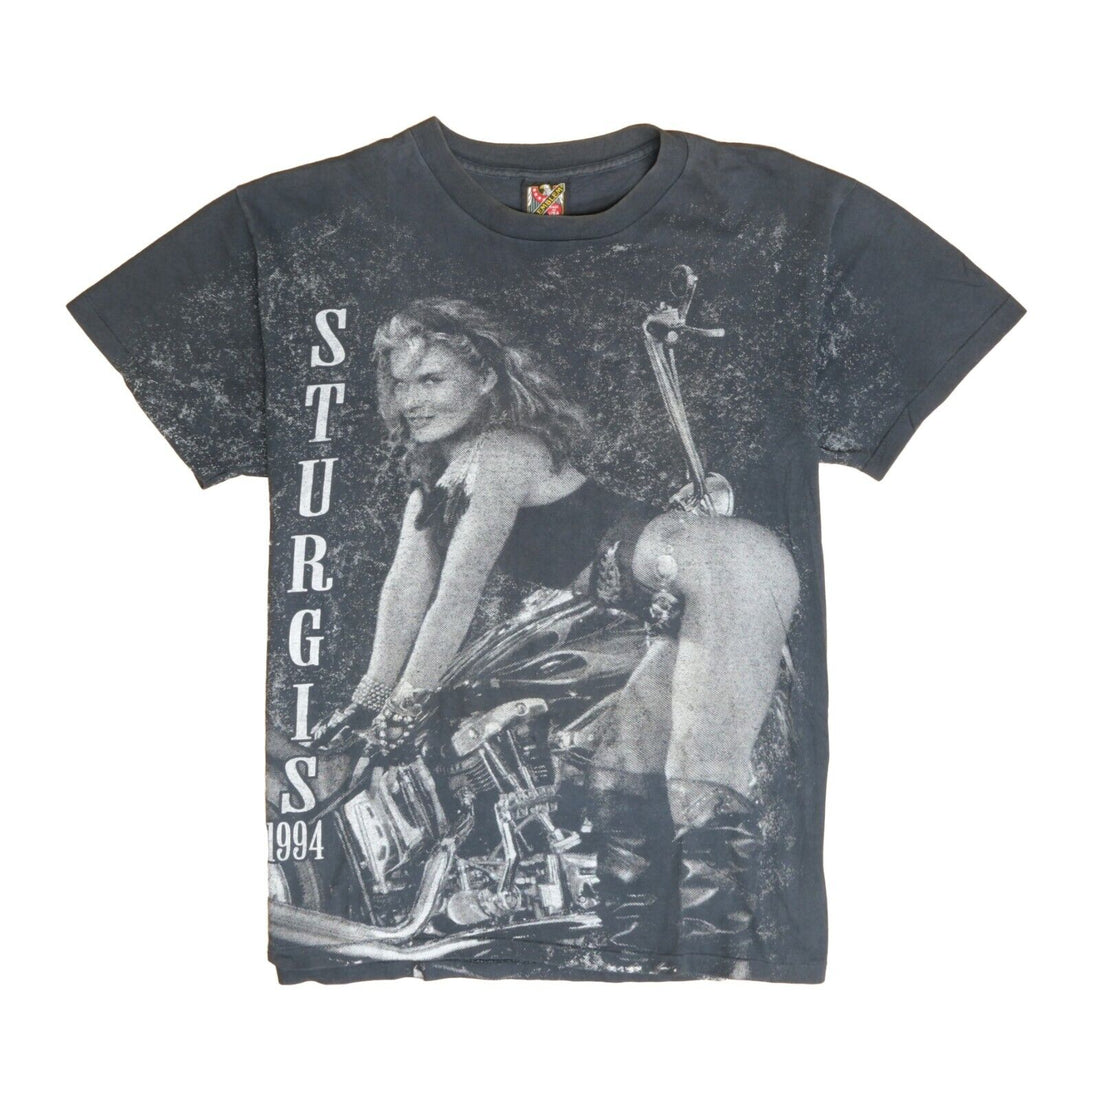 Vintage 3D Emblem Sturgis Nicole Pin Up Girl Motorcycle T-Shirt Large 1994 90s